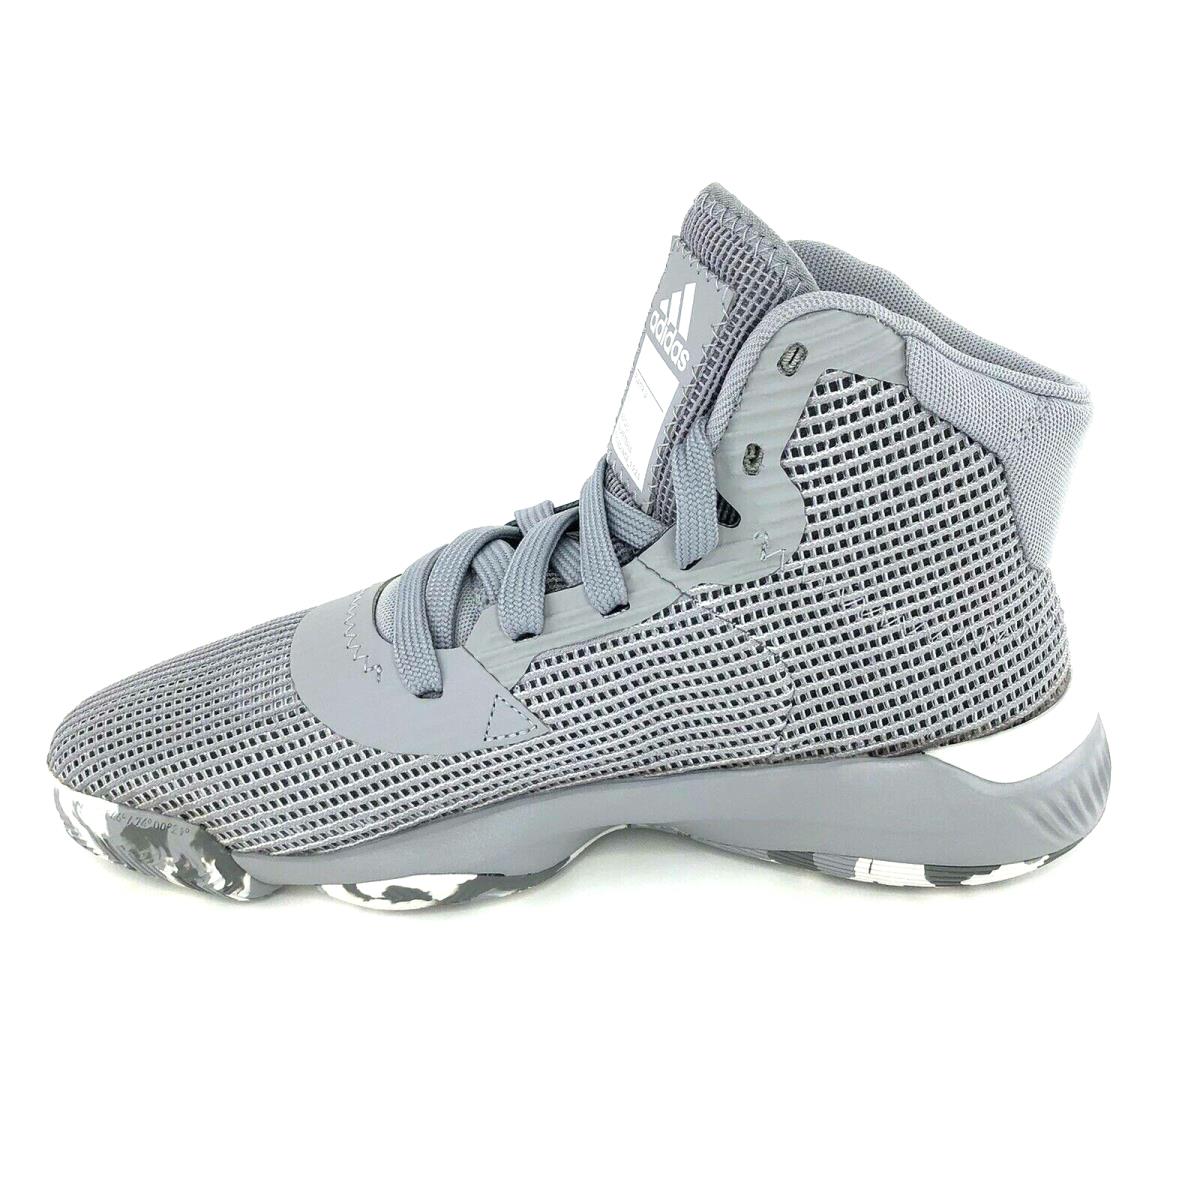 Adidas shoes Pro Bounce - Gray 2